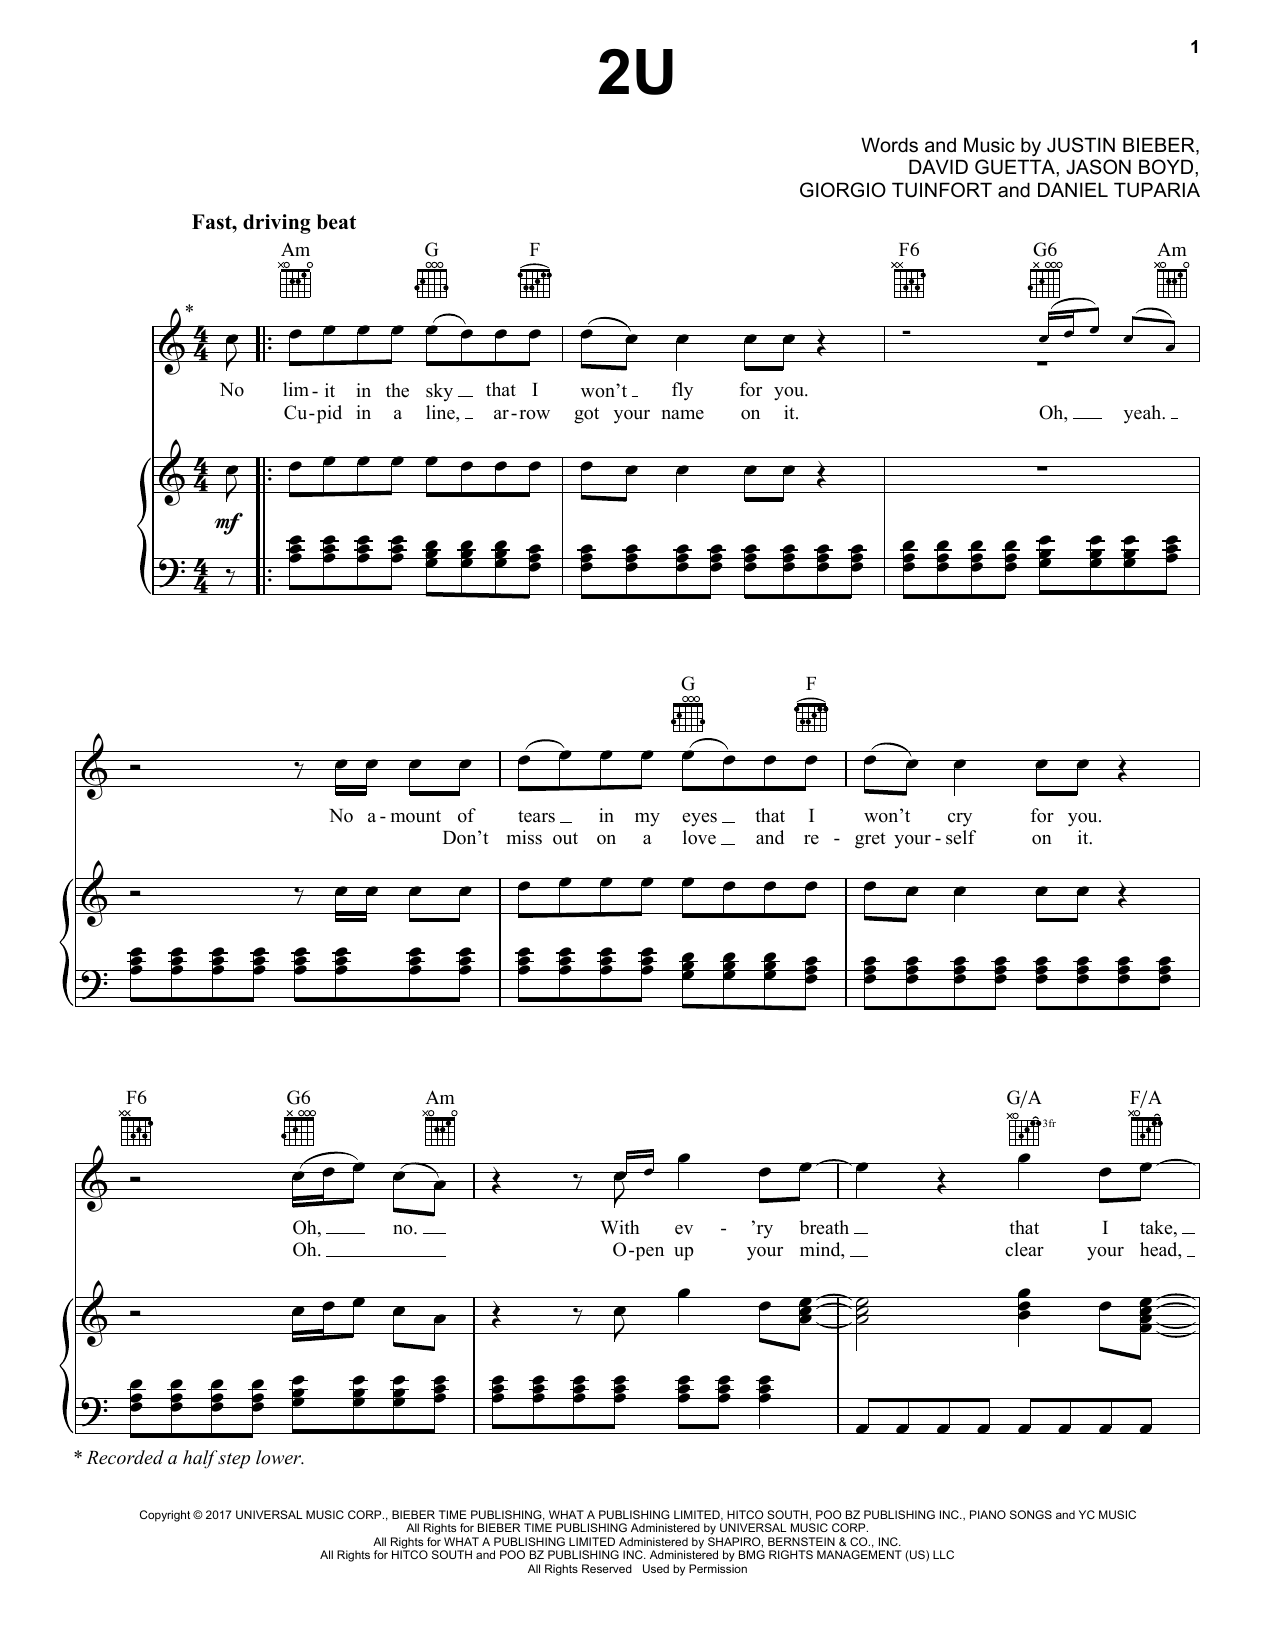 Justin Bieber & David Guetta 2U Sheet Music Notes & Chords for Easy Piano - Download or Print PDF